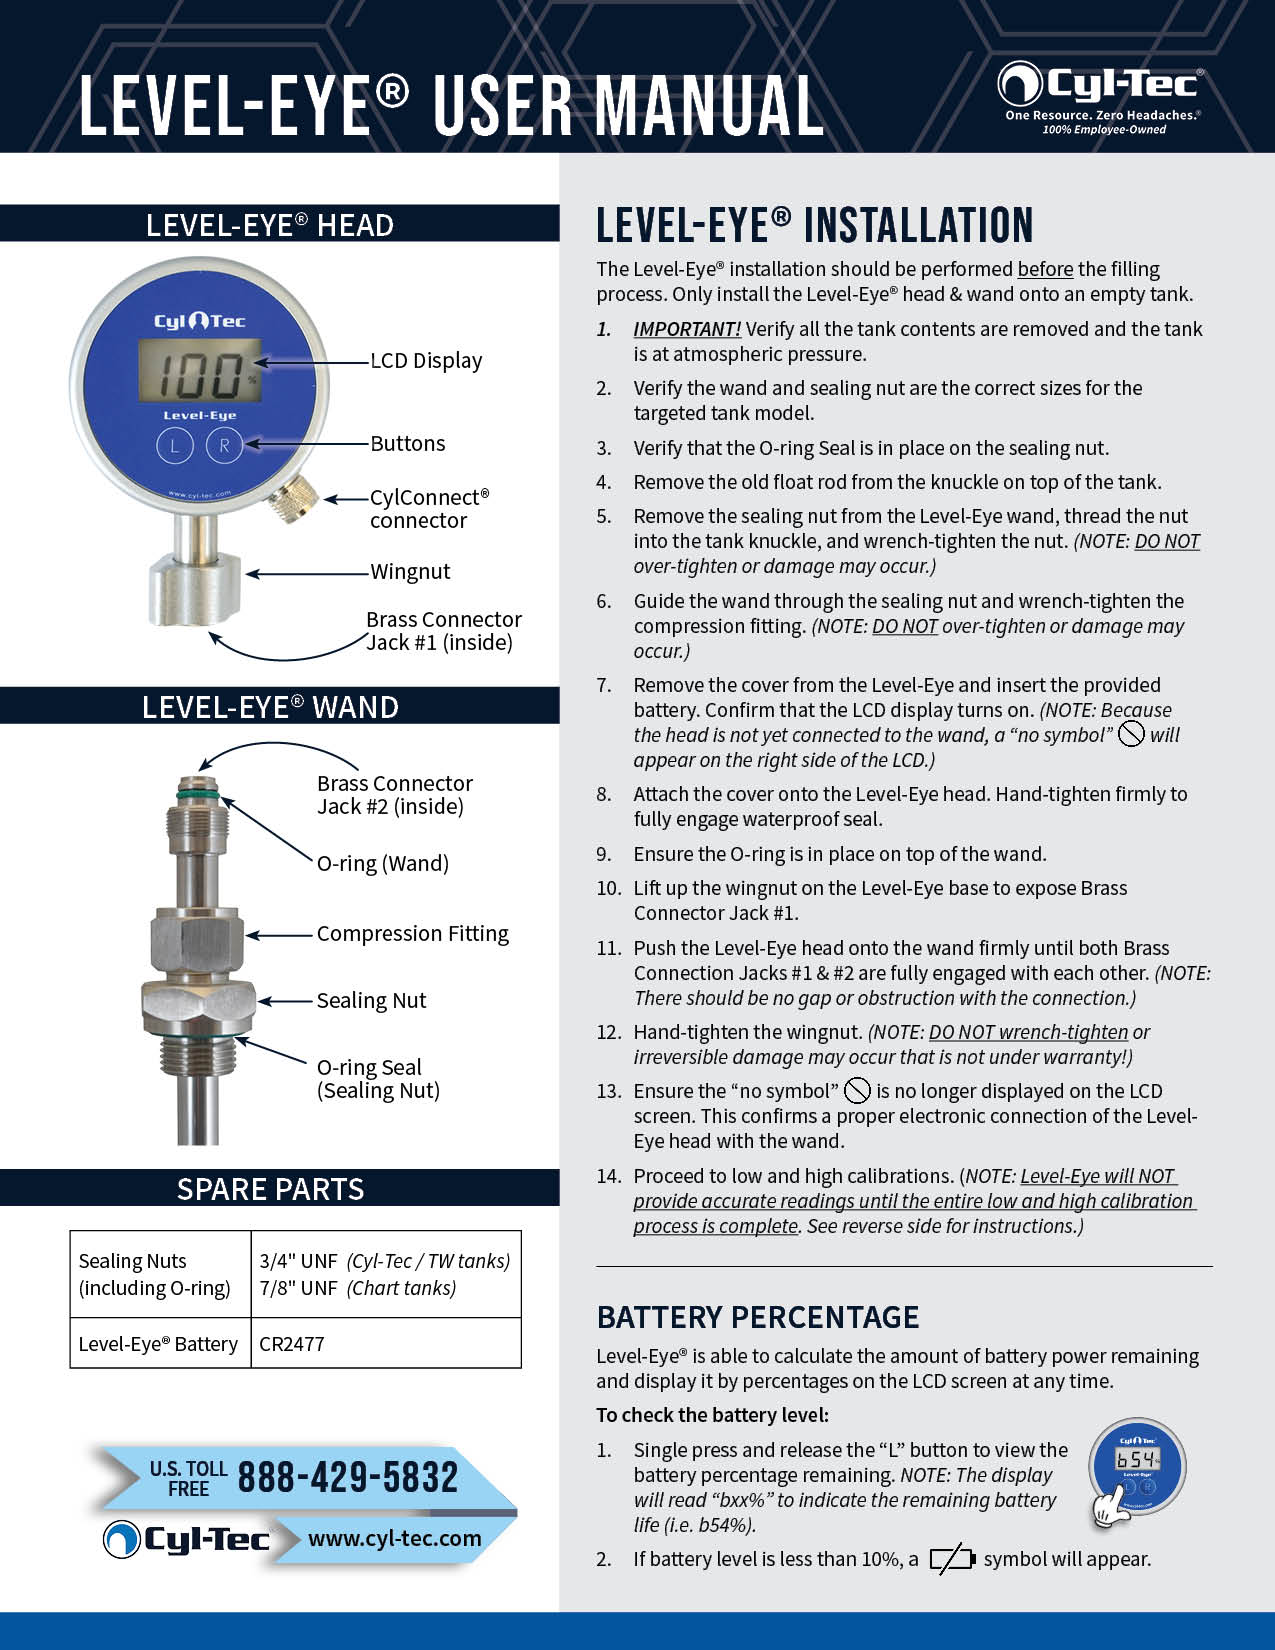 Level-Eye User Manual - Installation & Calibration